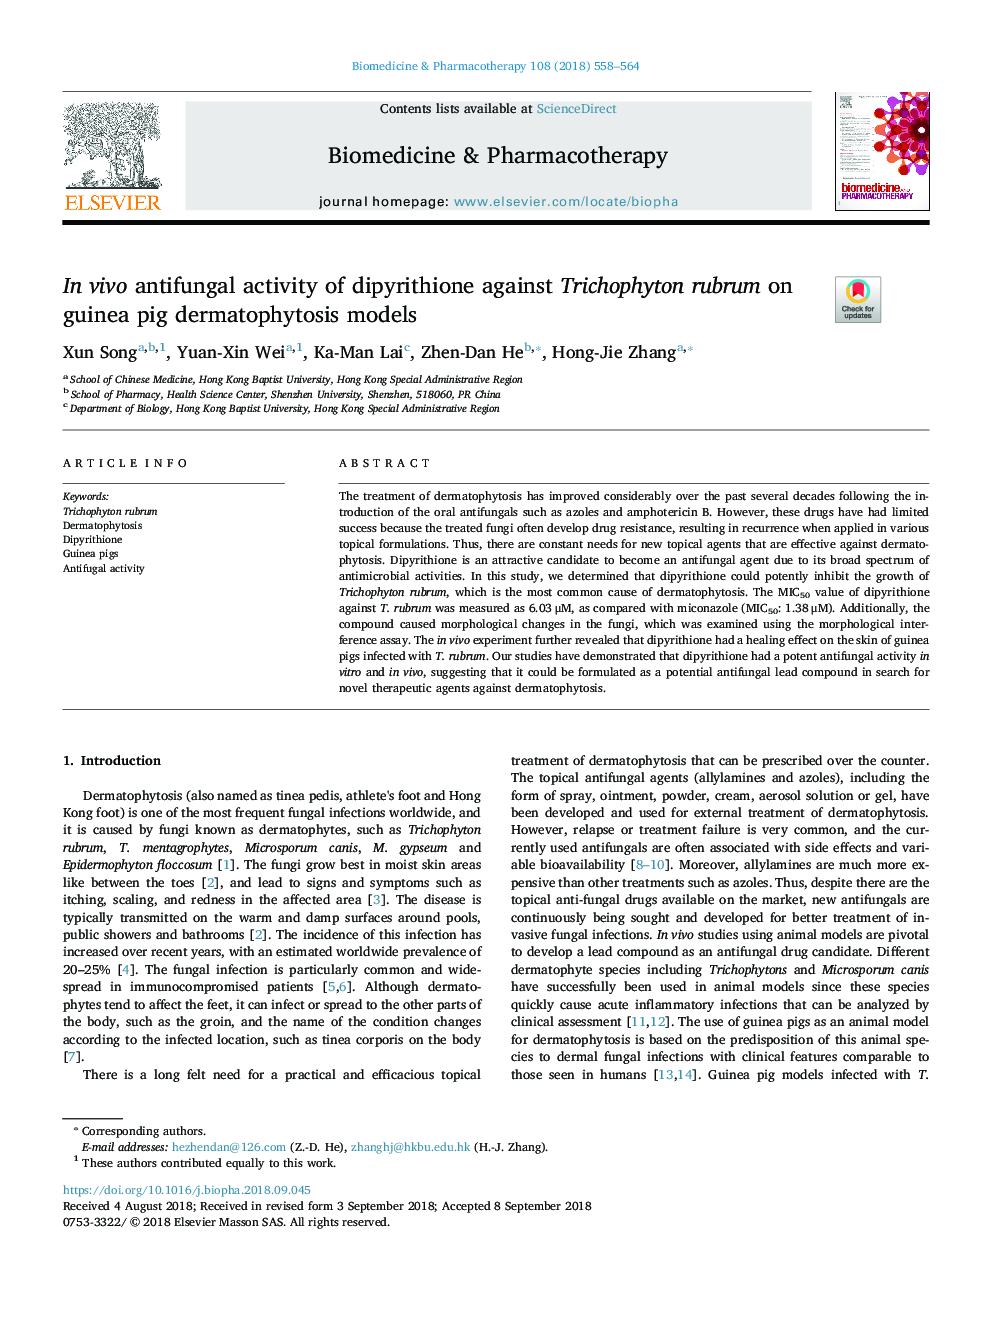 In vivo antifungal activity of dipyrithione against Trichophyton rubrum on guinea pig dermatophytosis models